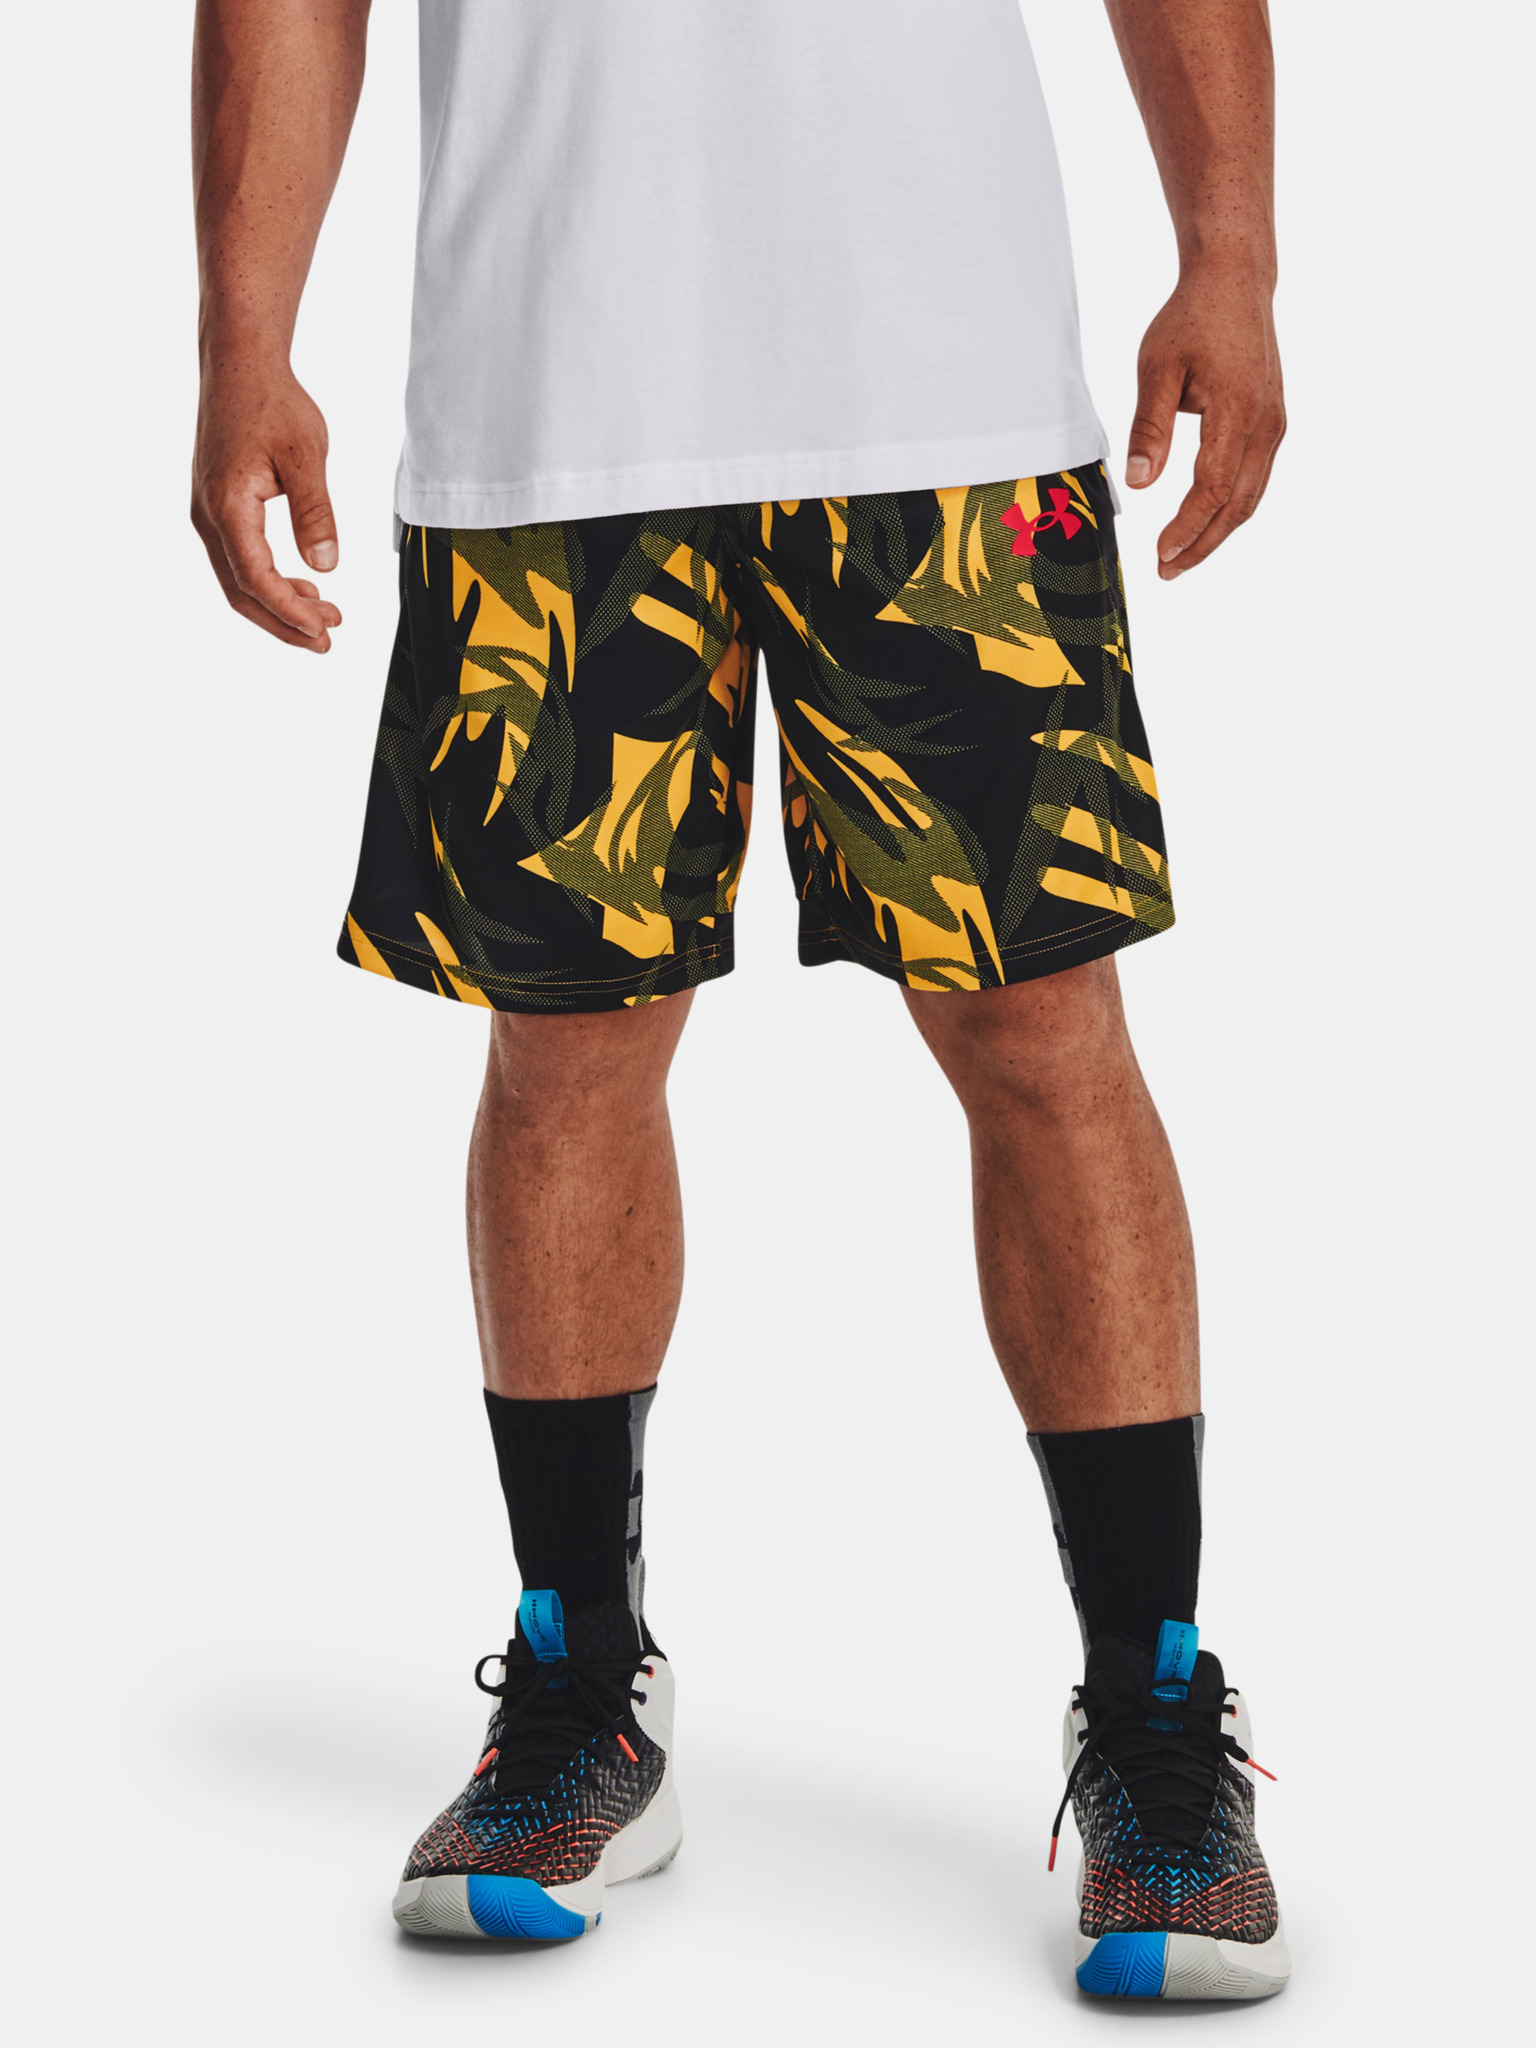 Under Armour BASELINE SHORT - Sports shorts - black/white/black 